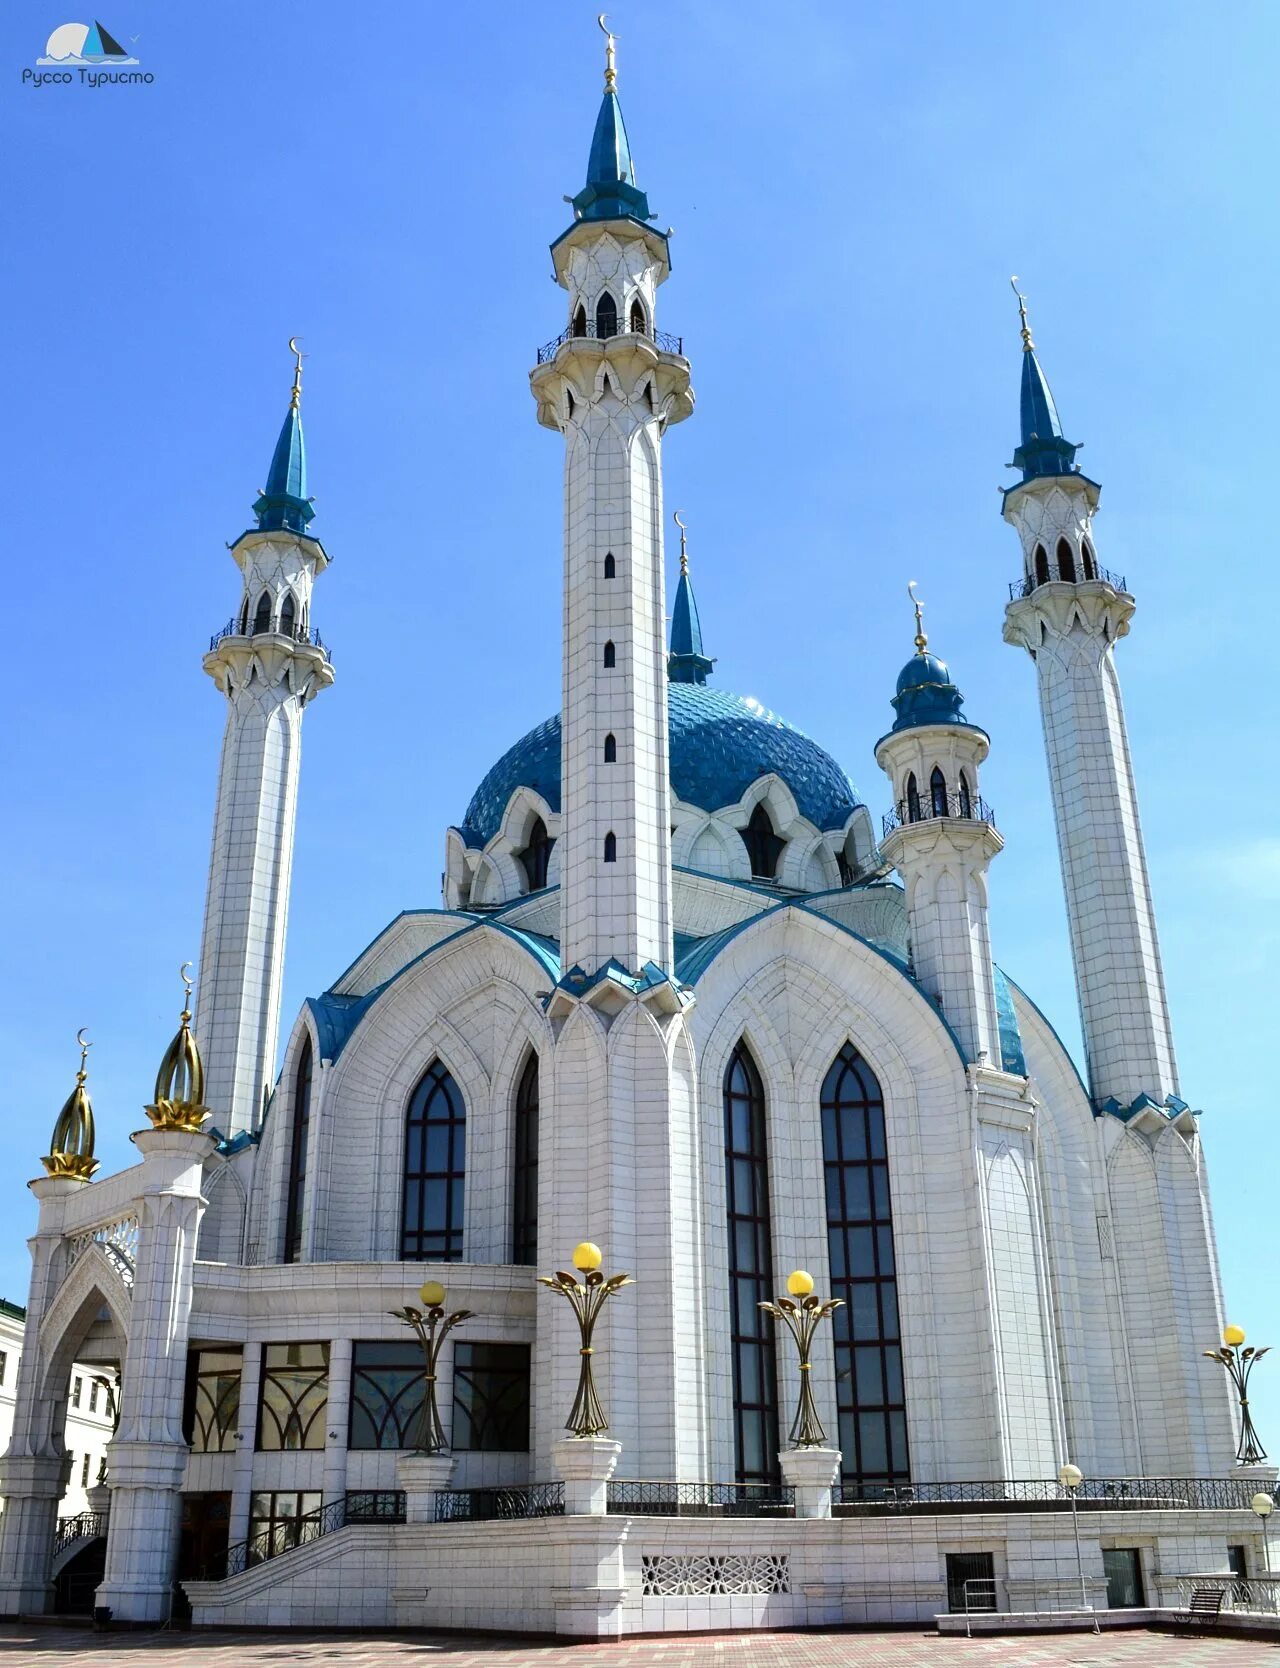 Мечеть кул шариф. Мечеткул Шариф в казан. Мечеть кул Шериф в Казани. Главная мечеть Татарстана кул-Шариф.